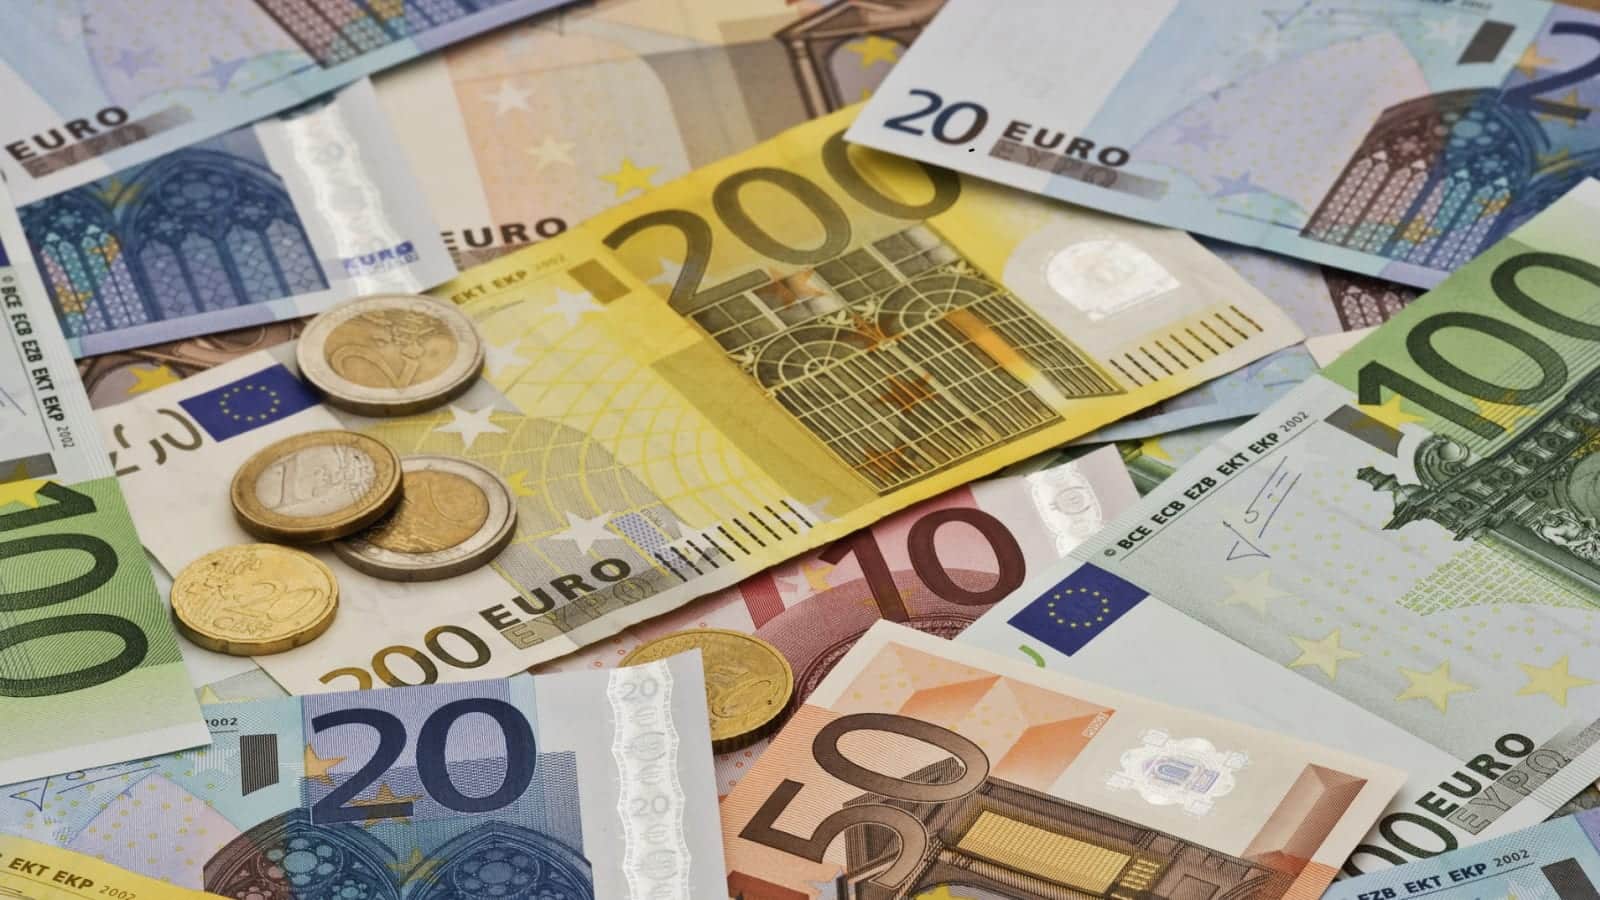 Global Impacts if EU Currency Falls